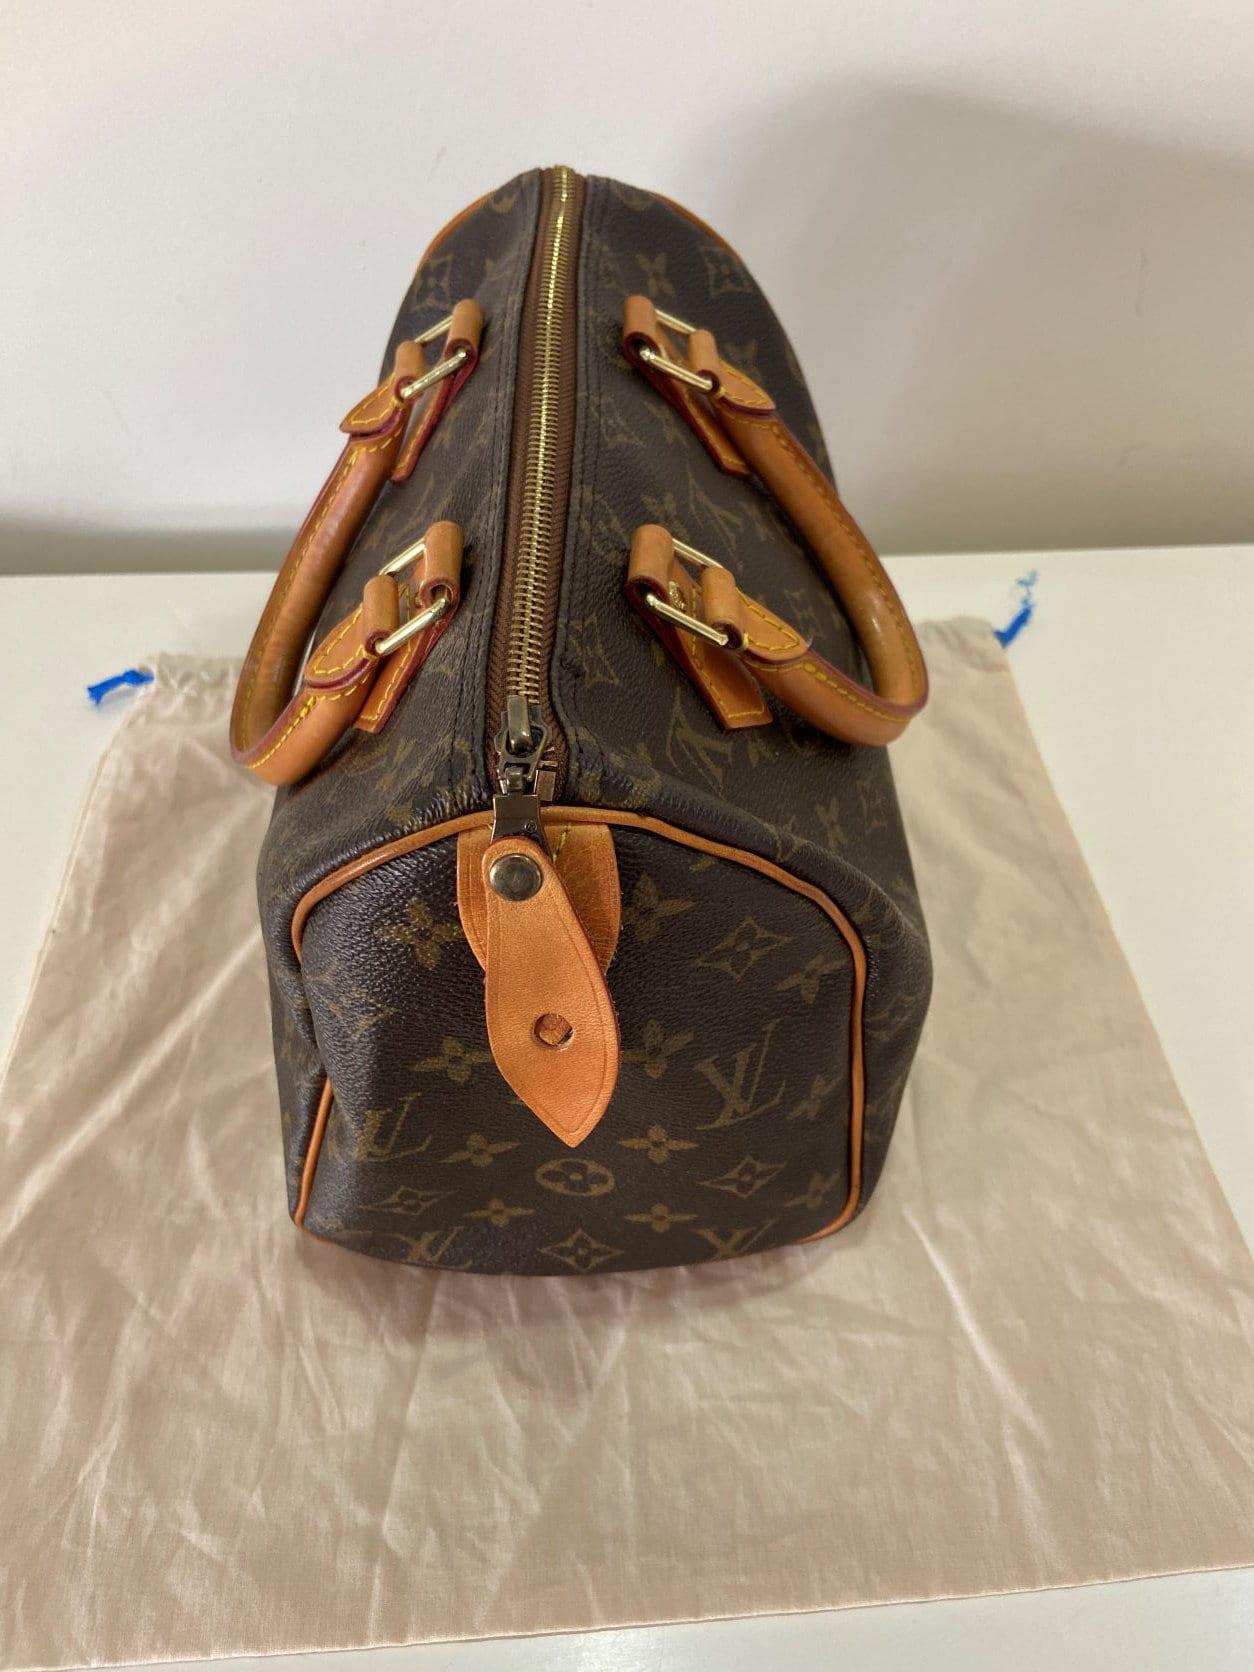 Authentic Louis Vuitton Monogram Speedy 25 Handbag - Tracesilver